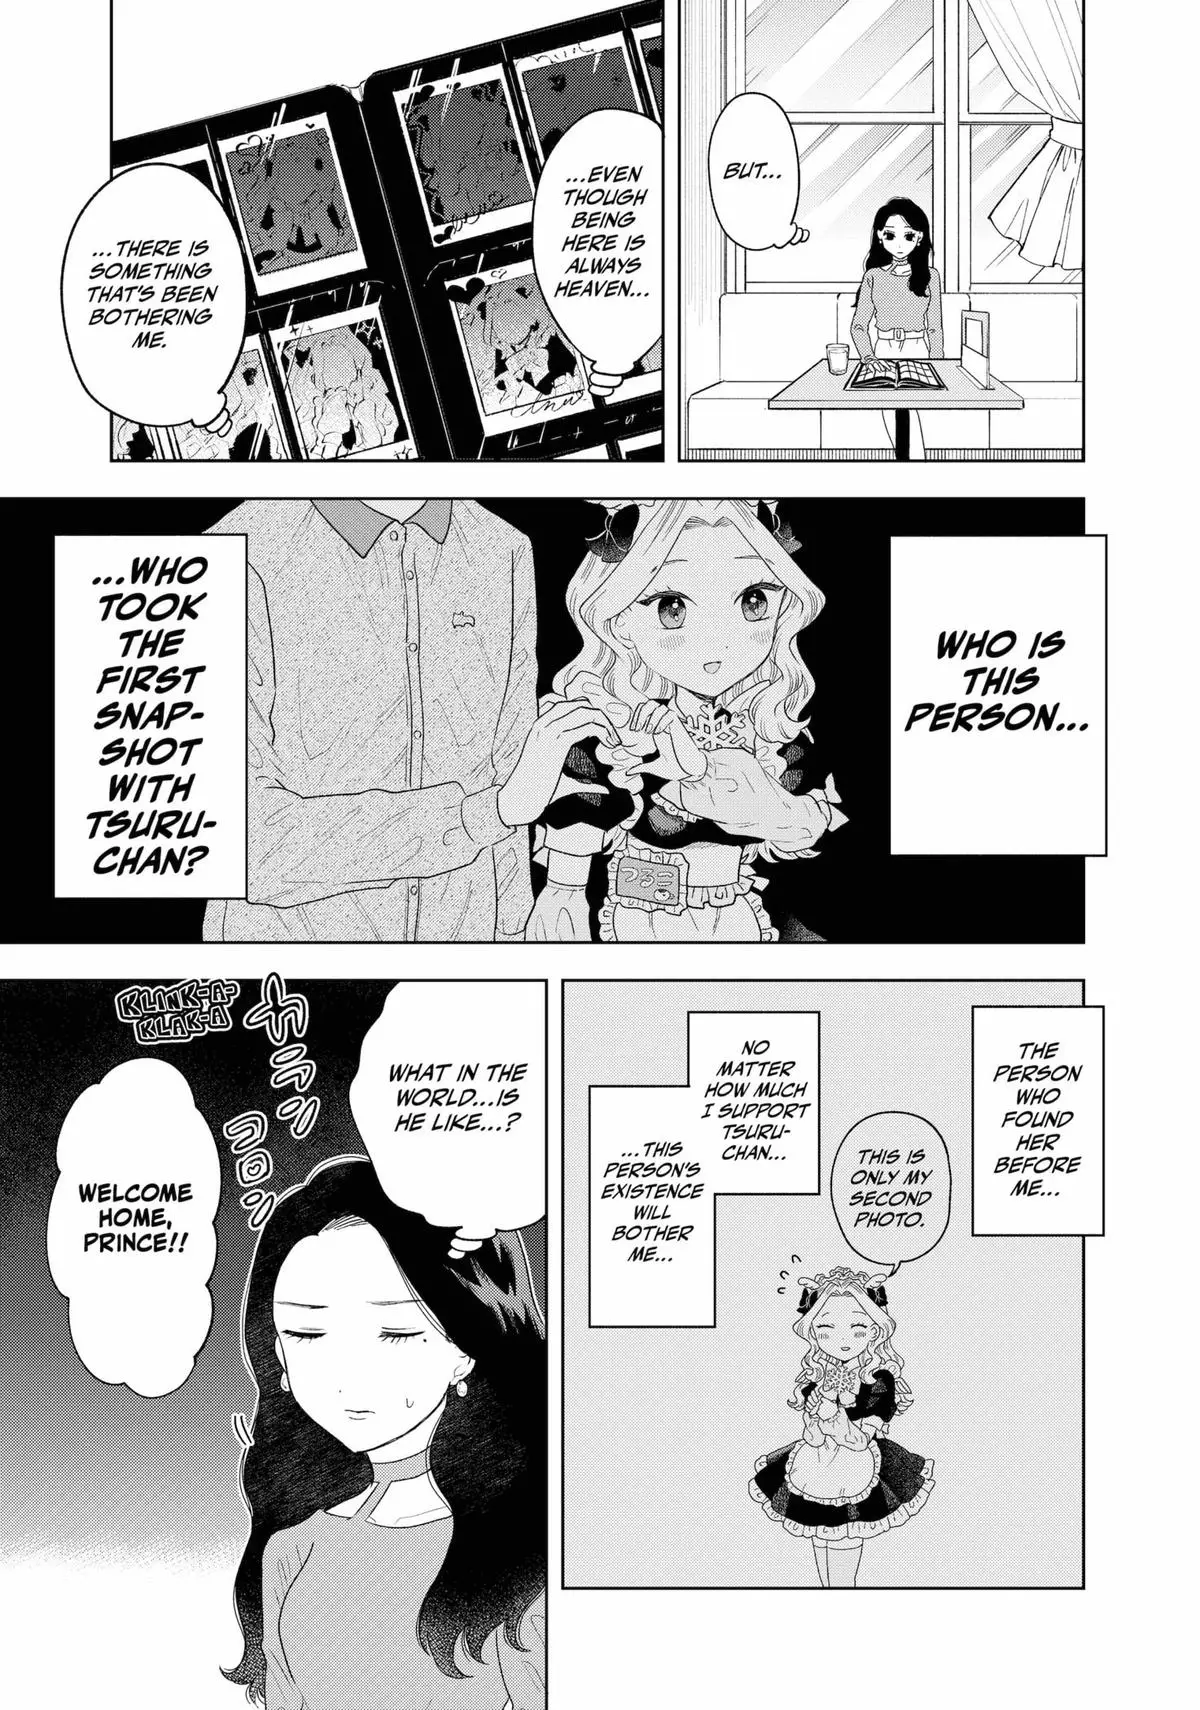 Tsuruko Returns The Favor - 10 page 9-650e671f